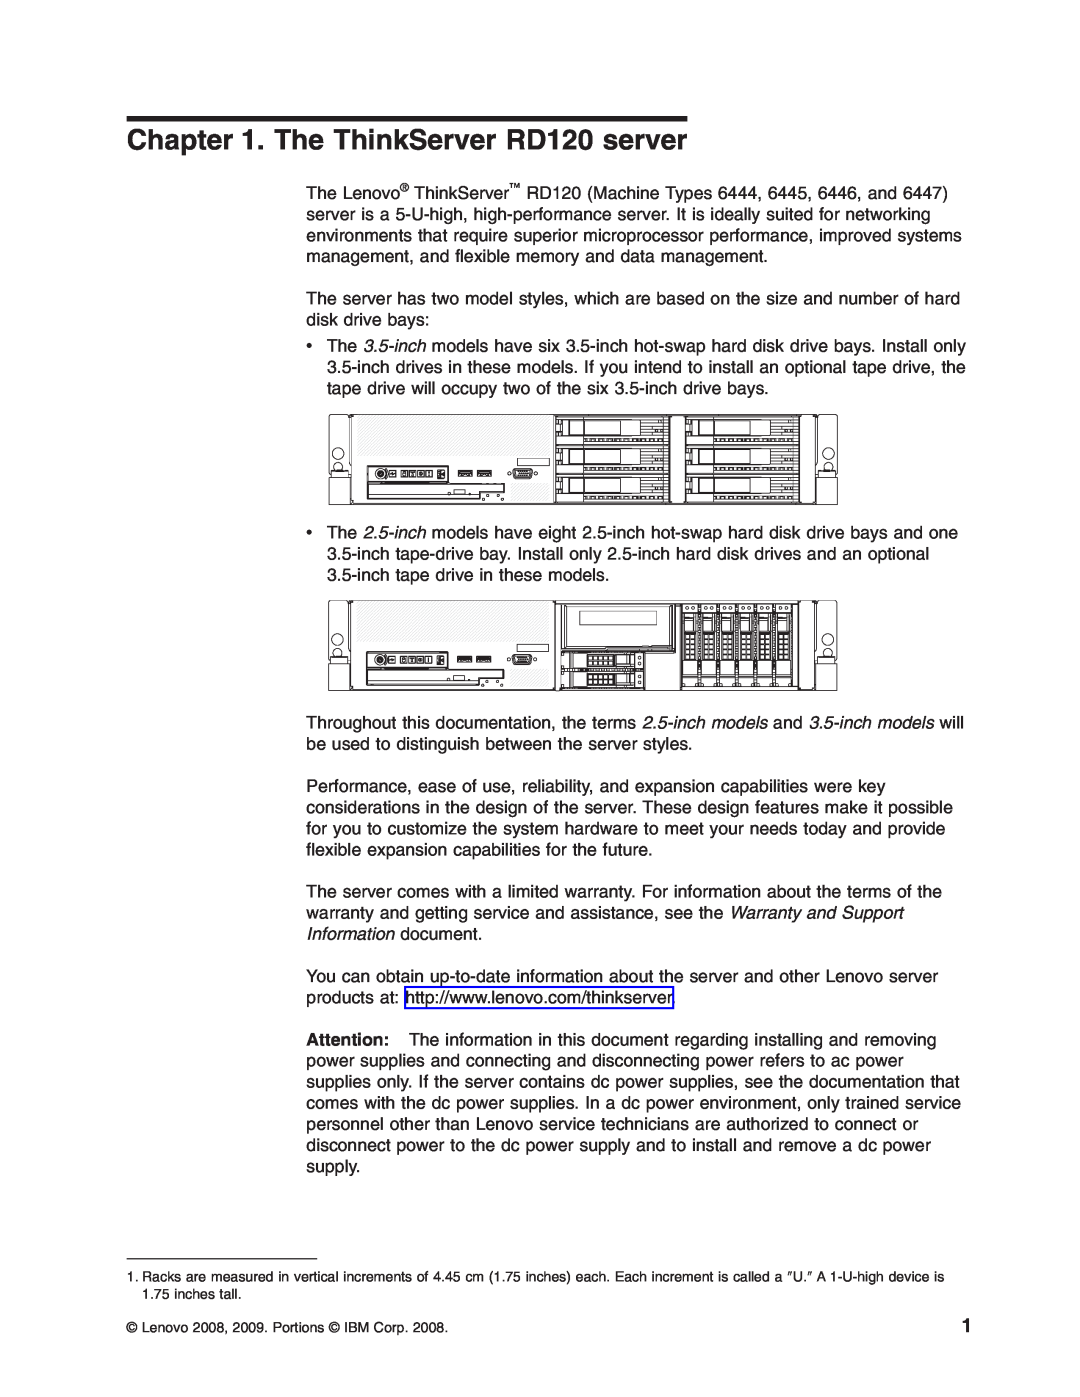 Lenovo manual The ThinkServer RD120 server, Lenovo 2008, 2009. Portions IBM Corp 